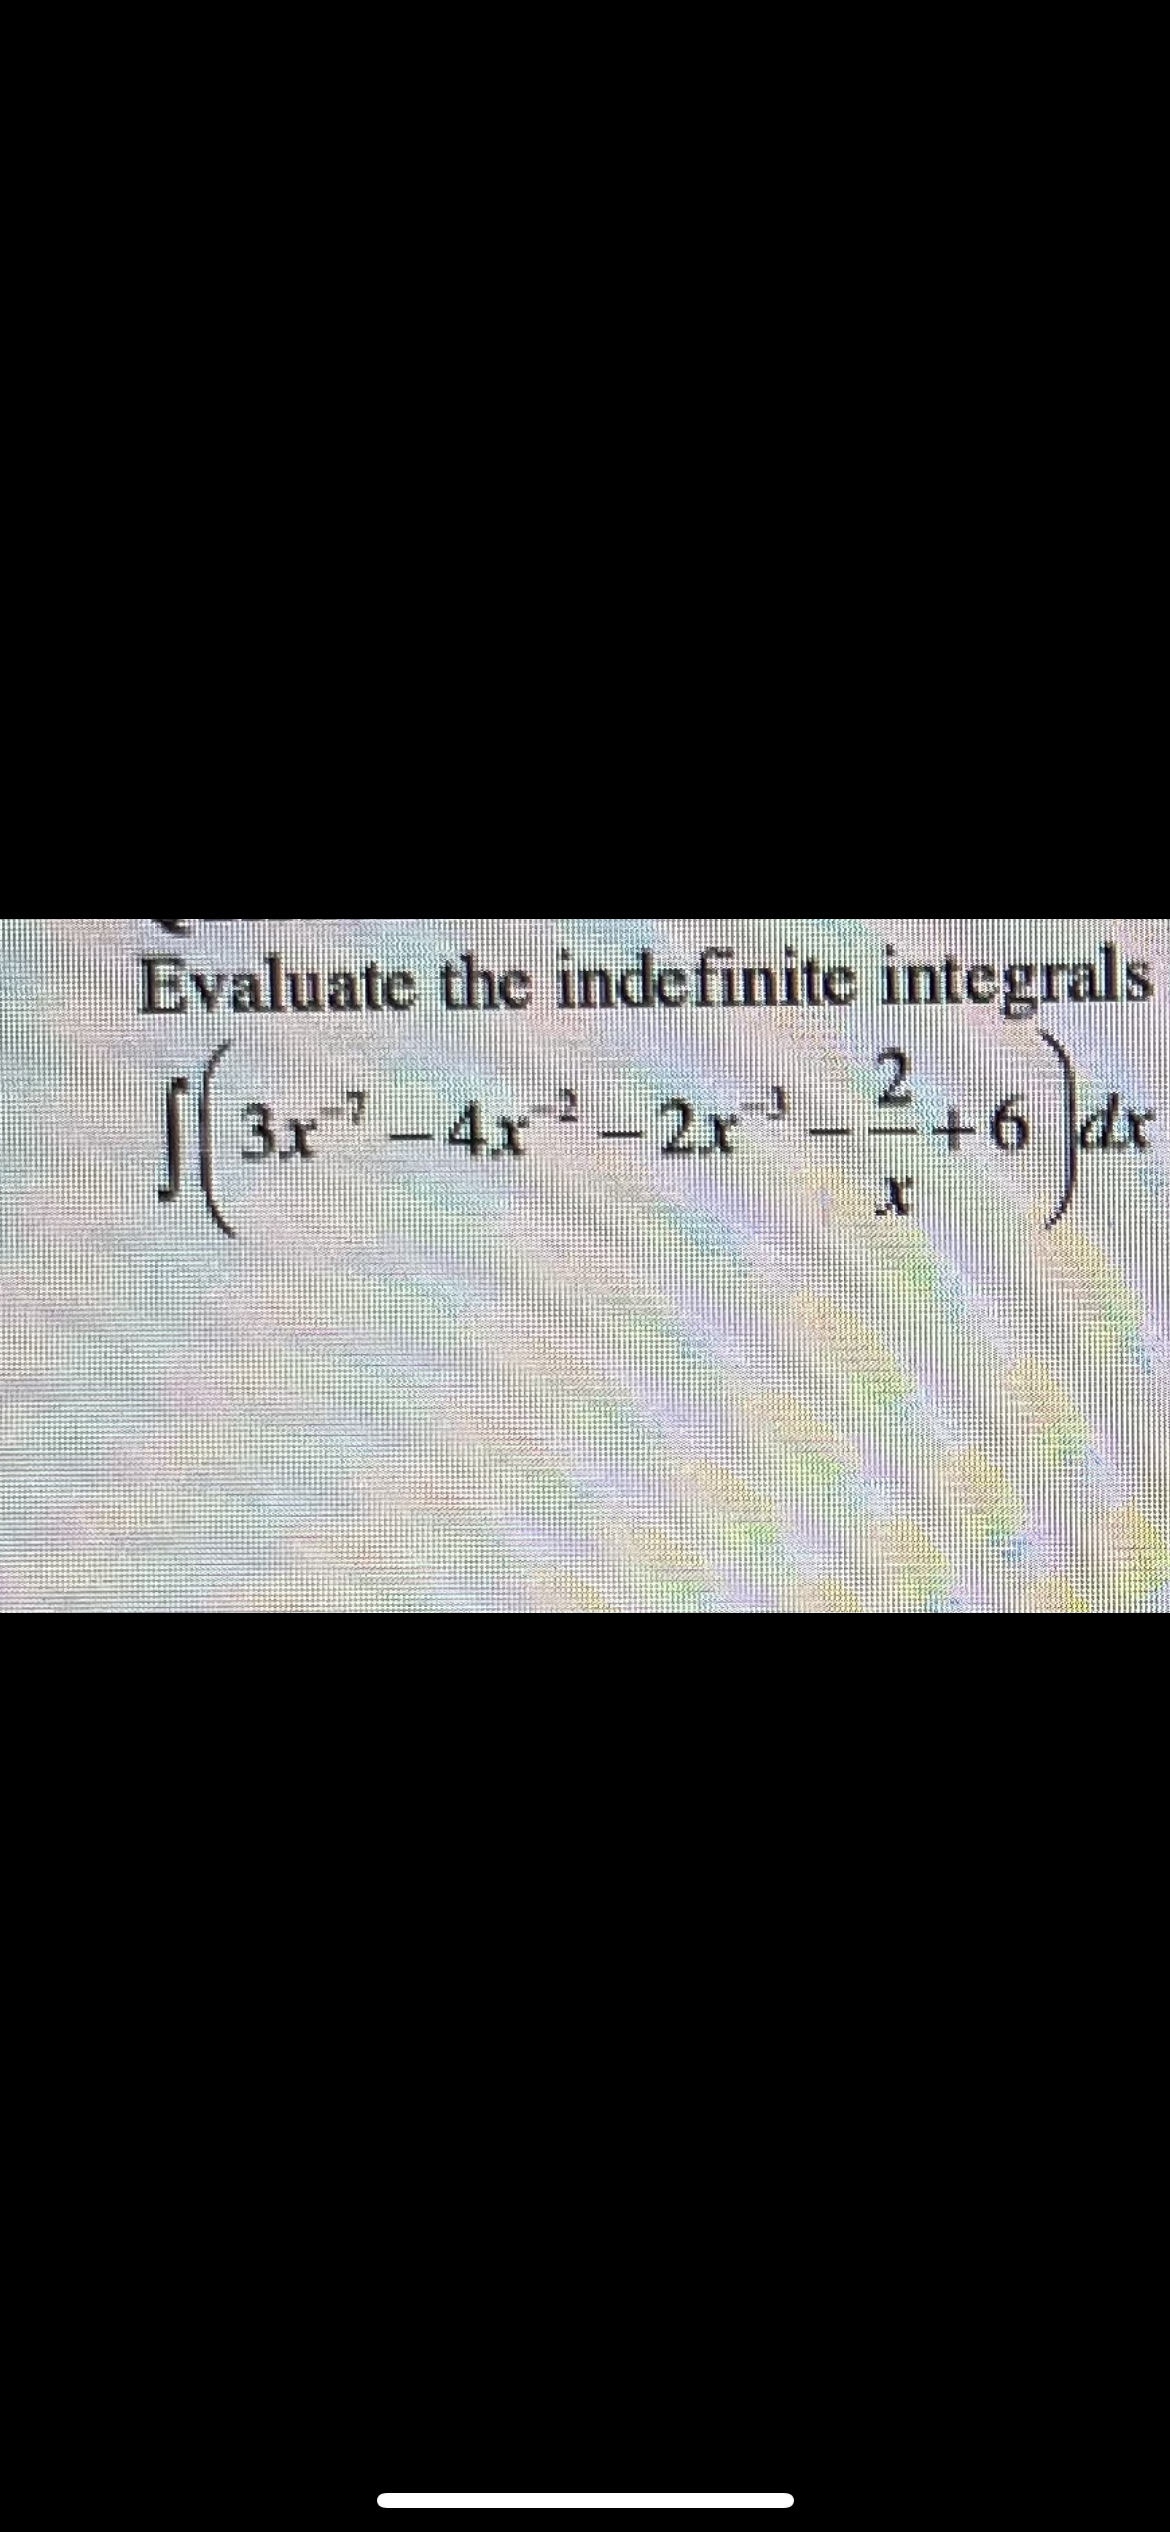 Evaluate the indefinite integrals
3x-4x-2x
2
-+6 dx
